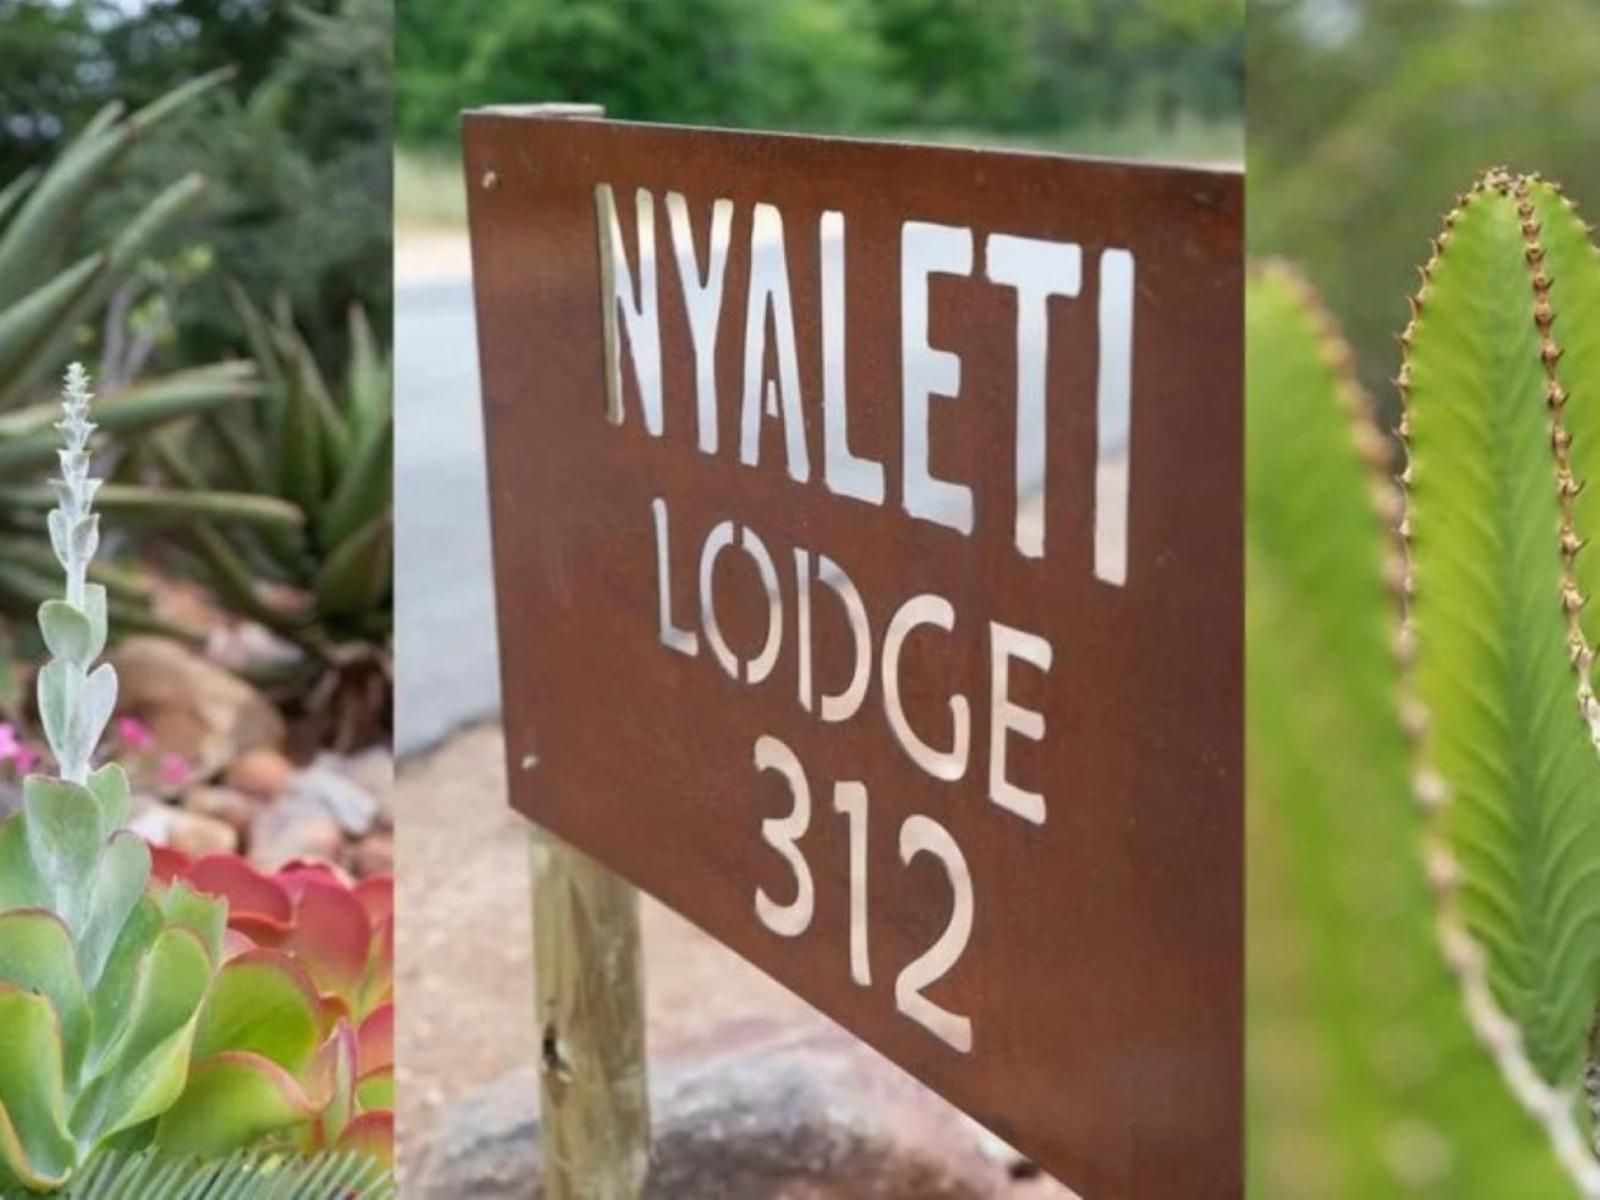 Nyaleti Lodge Hoedspruit Limpopo Province South Africa Sign